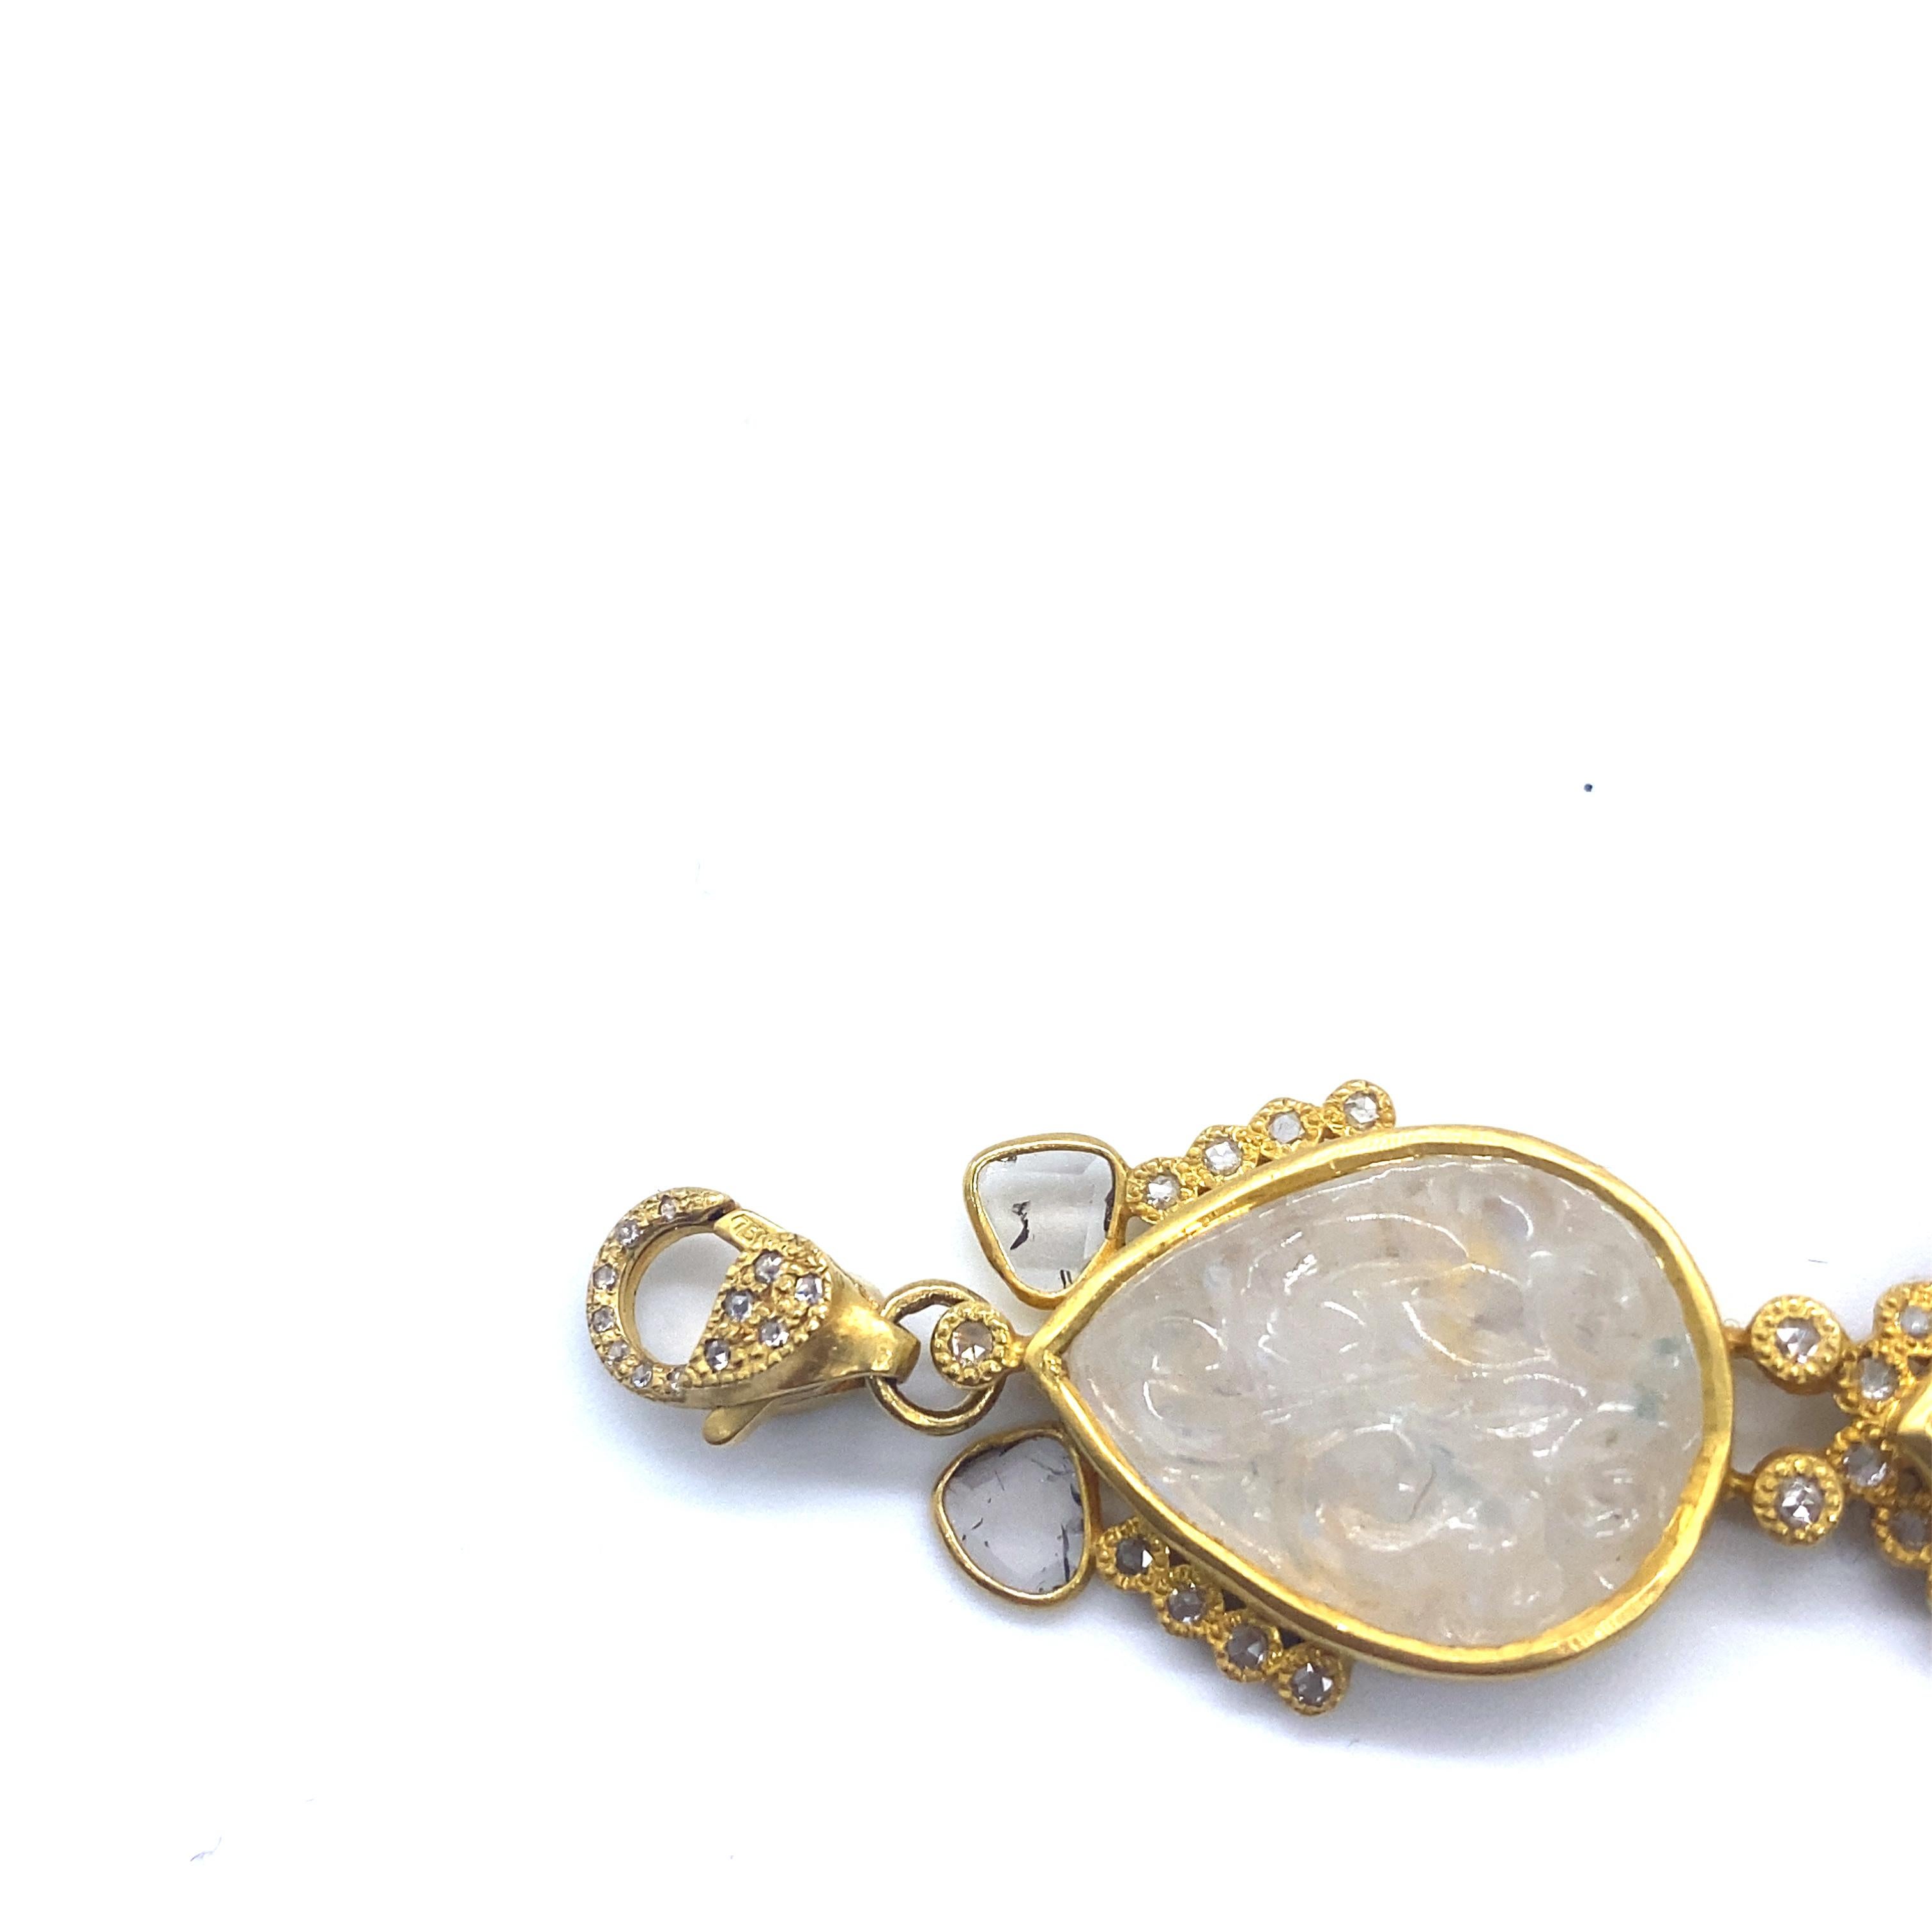 Women's or Men's 50.96 Carat Smoky Carved Moonstone Bracelet with Rose-Cut Diamonds